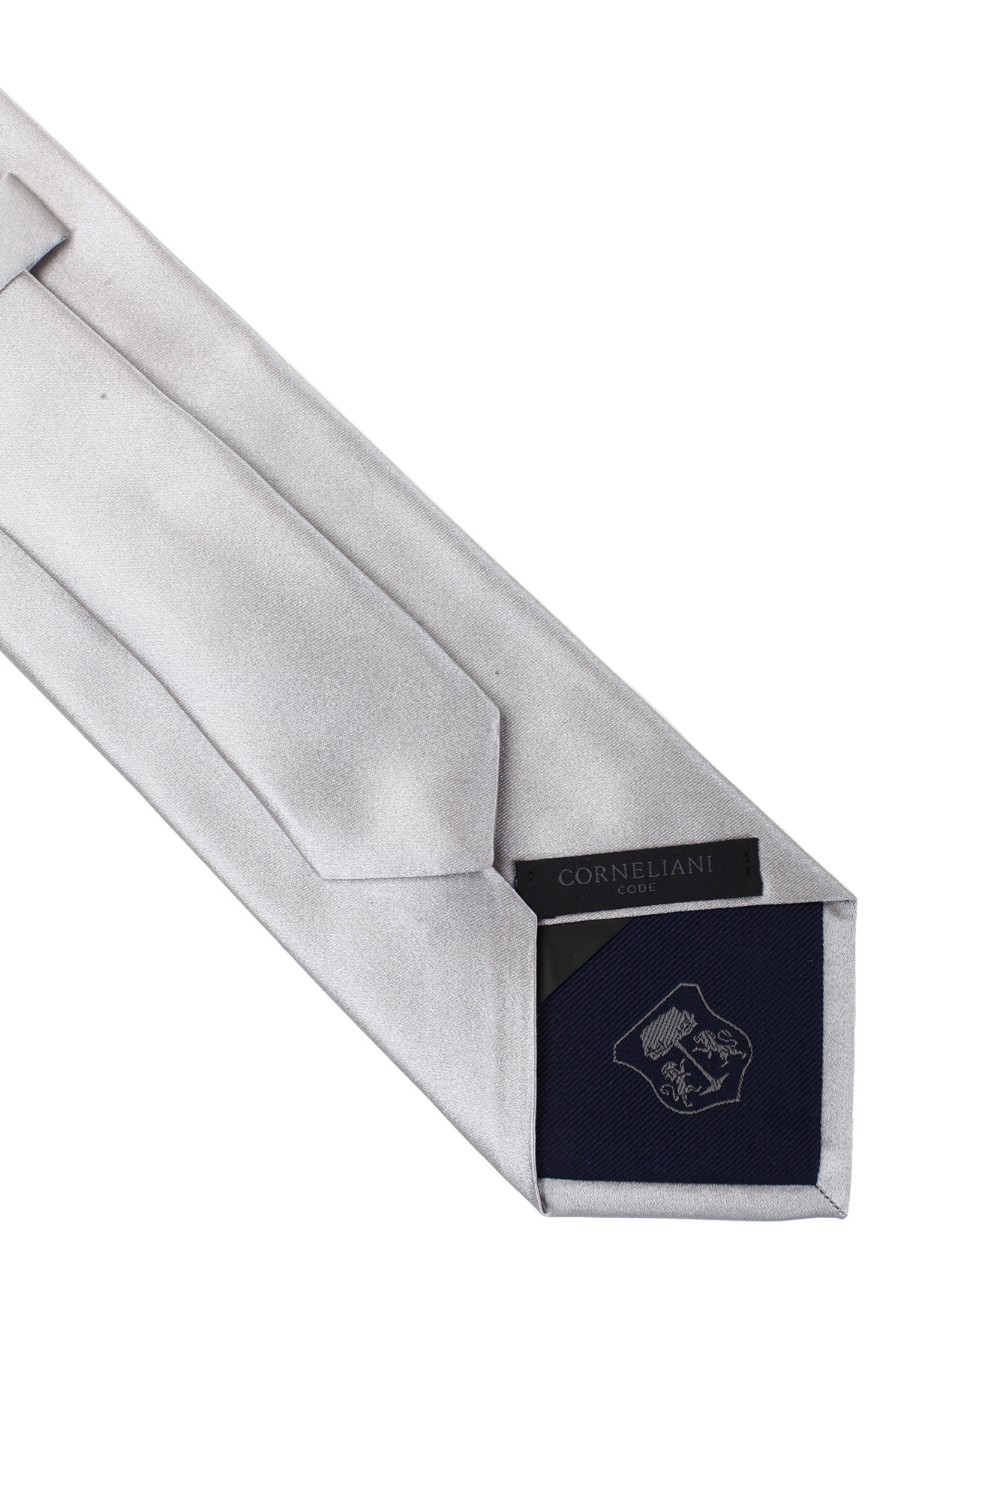 shop CORNELIANI  Cravatta: Corneliani cravatta in seta grigio perla.
Composizione: 100% seta.
Made in Italy.. 91U906 3120480-014 number 5557661